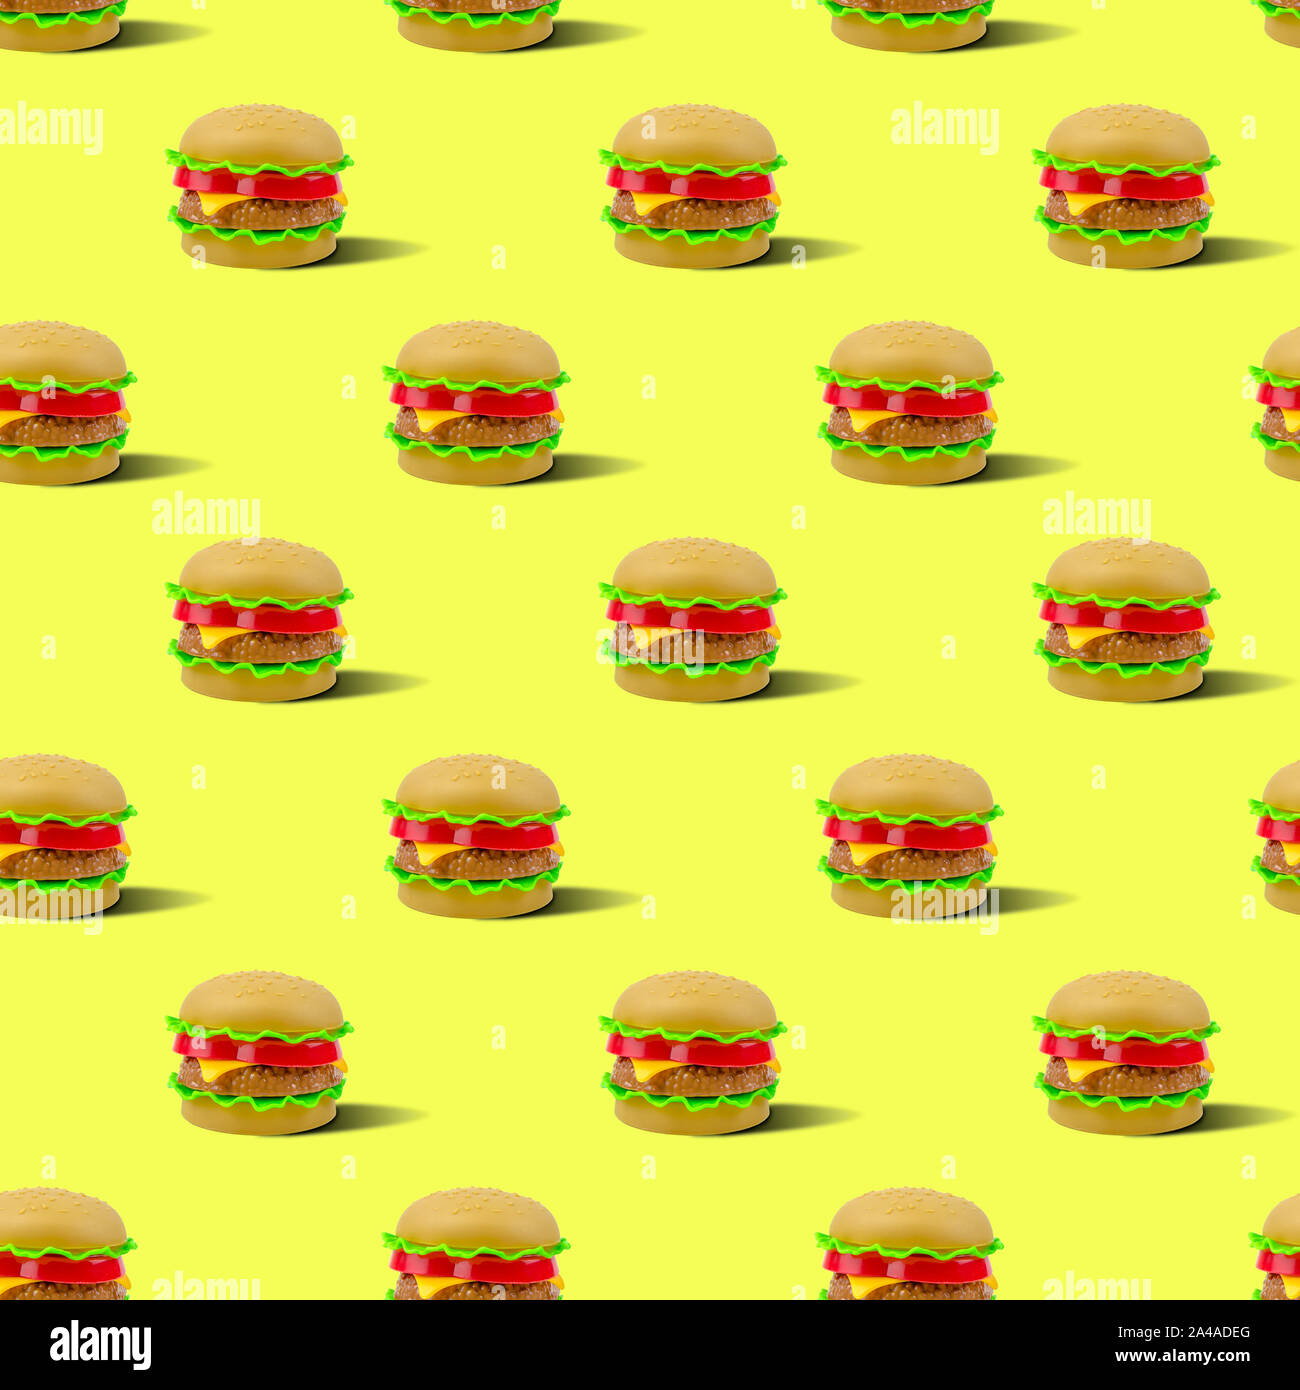 fast food pattern plastic burger on a yellow background. modern style isometric pattern Stock Photo